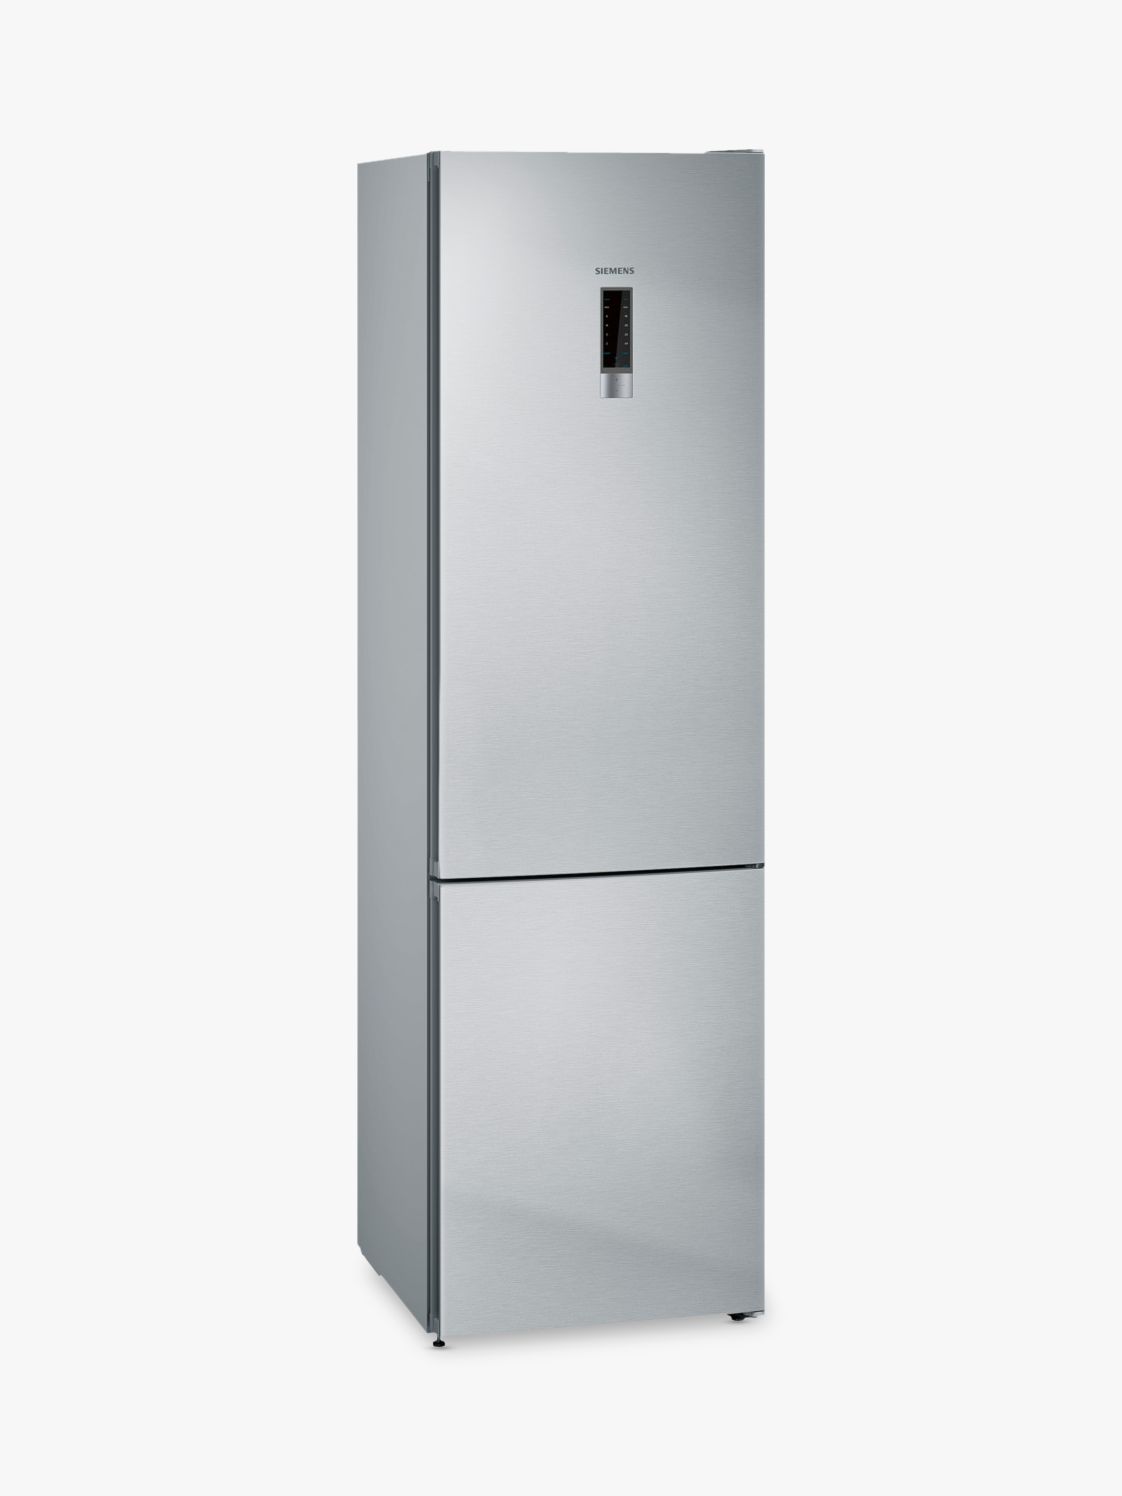 Siemens KG39NXI35 Freestanding Fridge Freezer, A++ Energy Rating, 60cm Wide, Stainless Steel